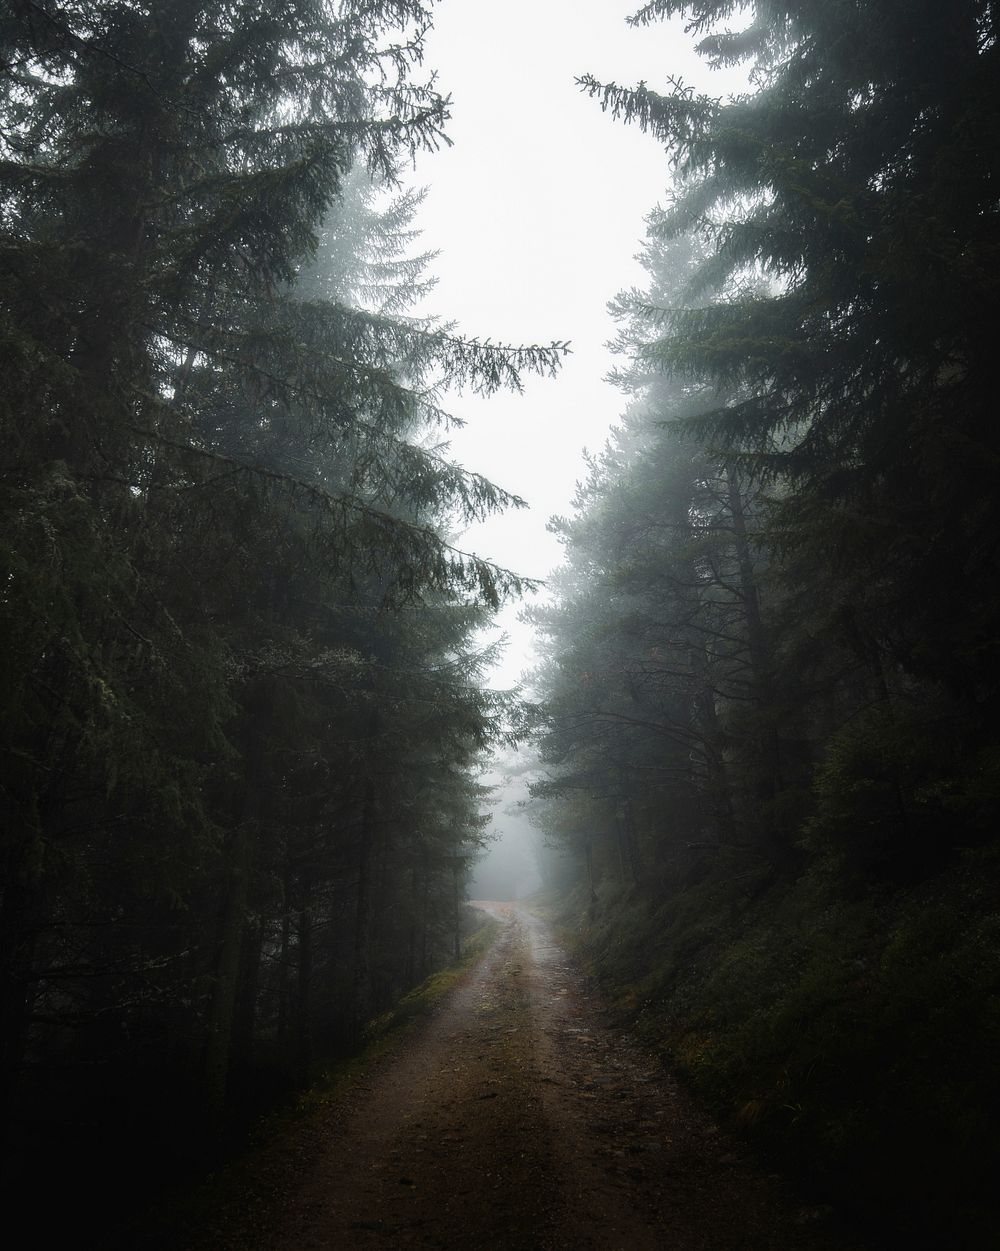 Pathway through misty woods towards the Dolomites